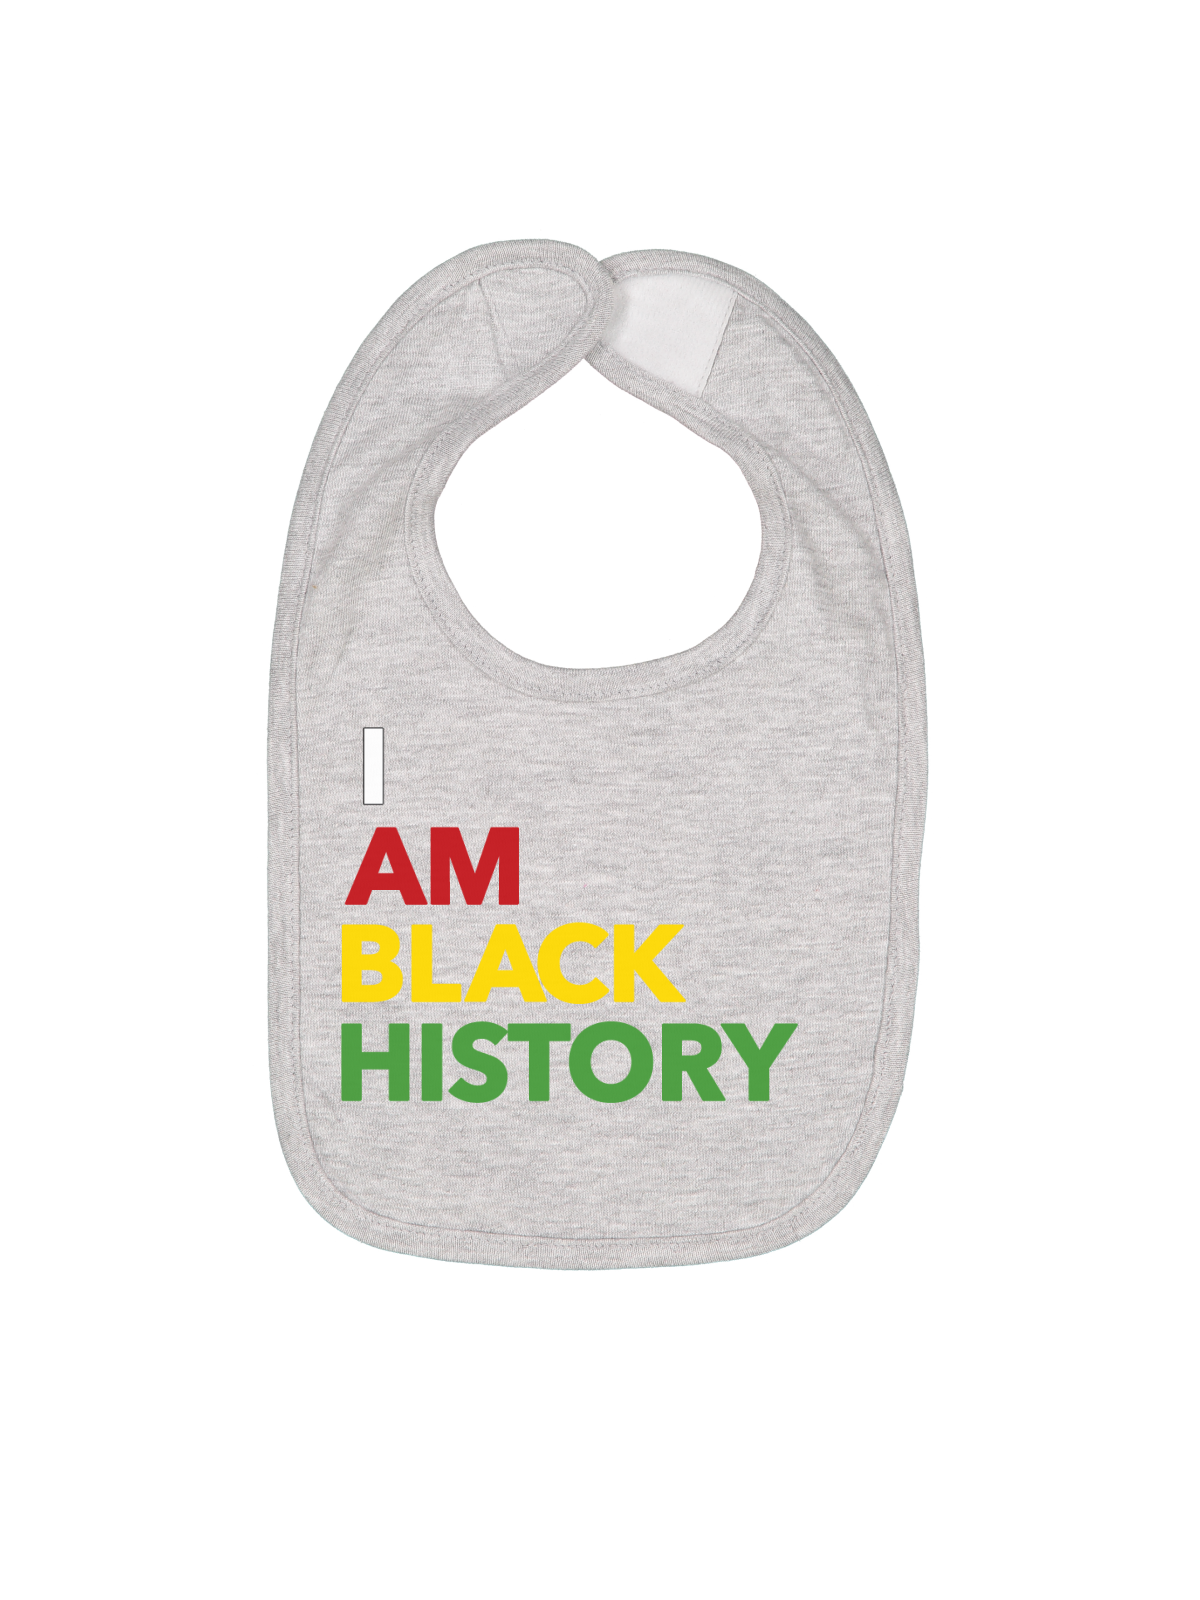 I am Black History infant bib